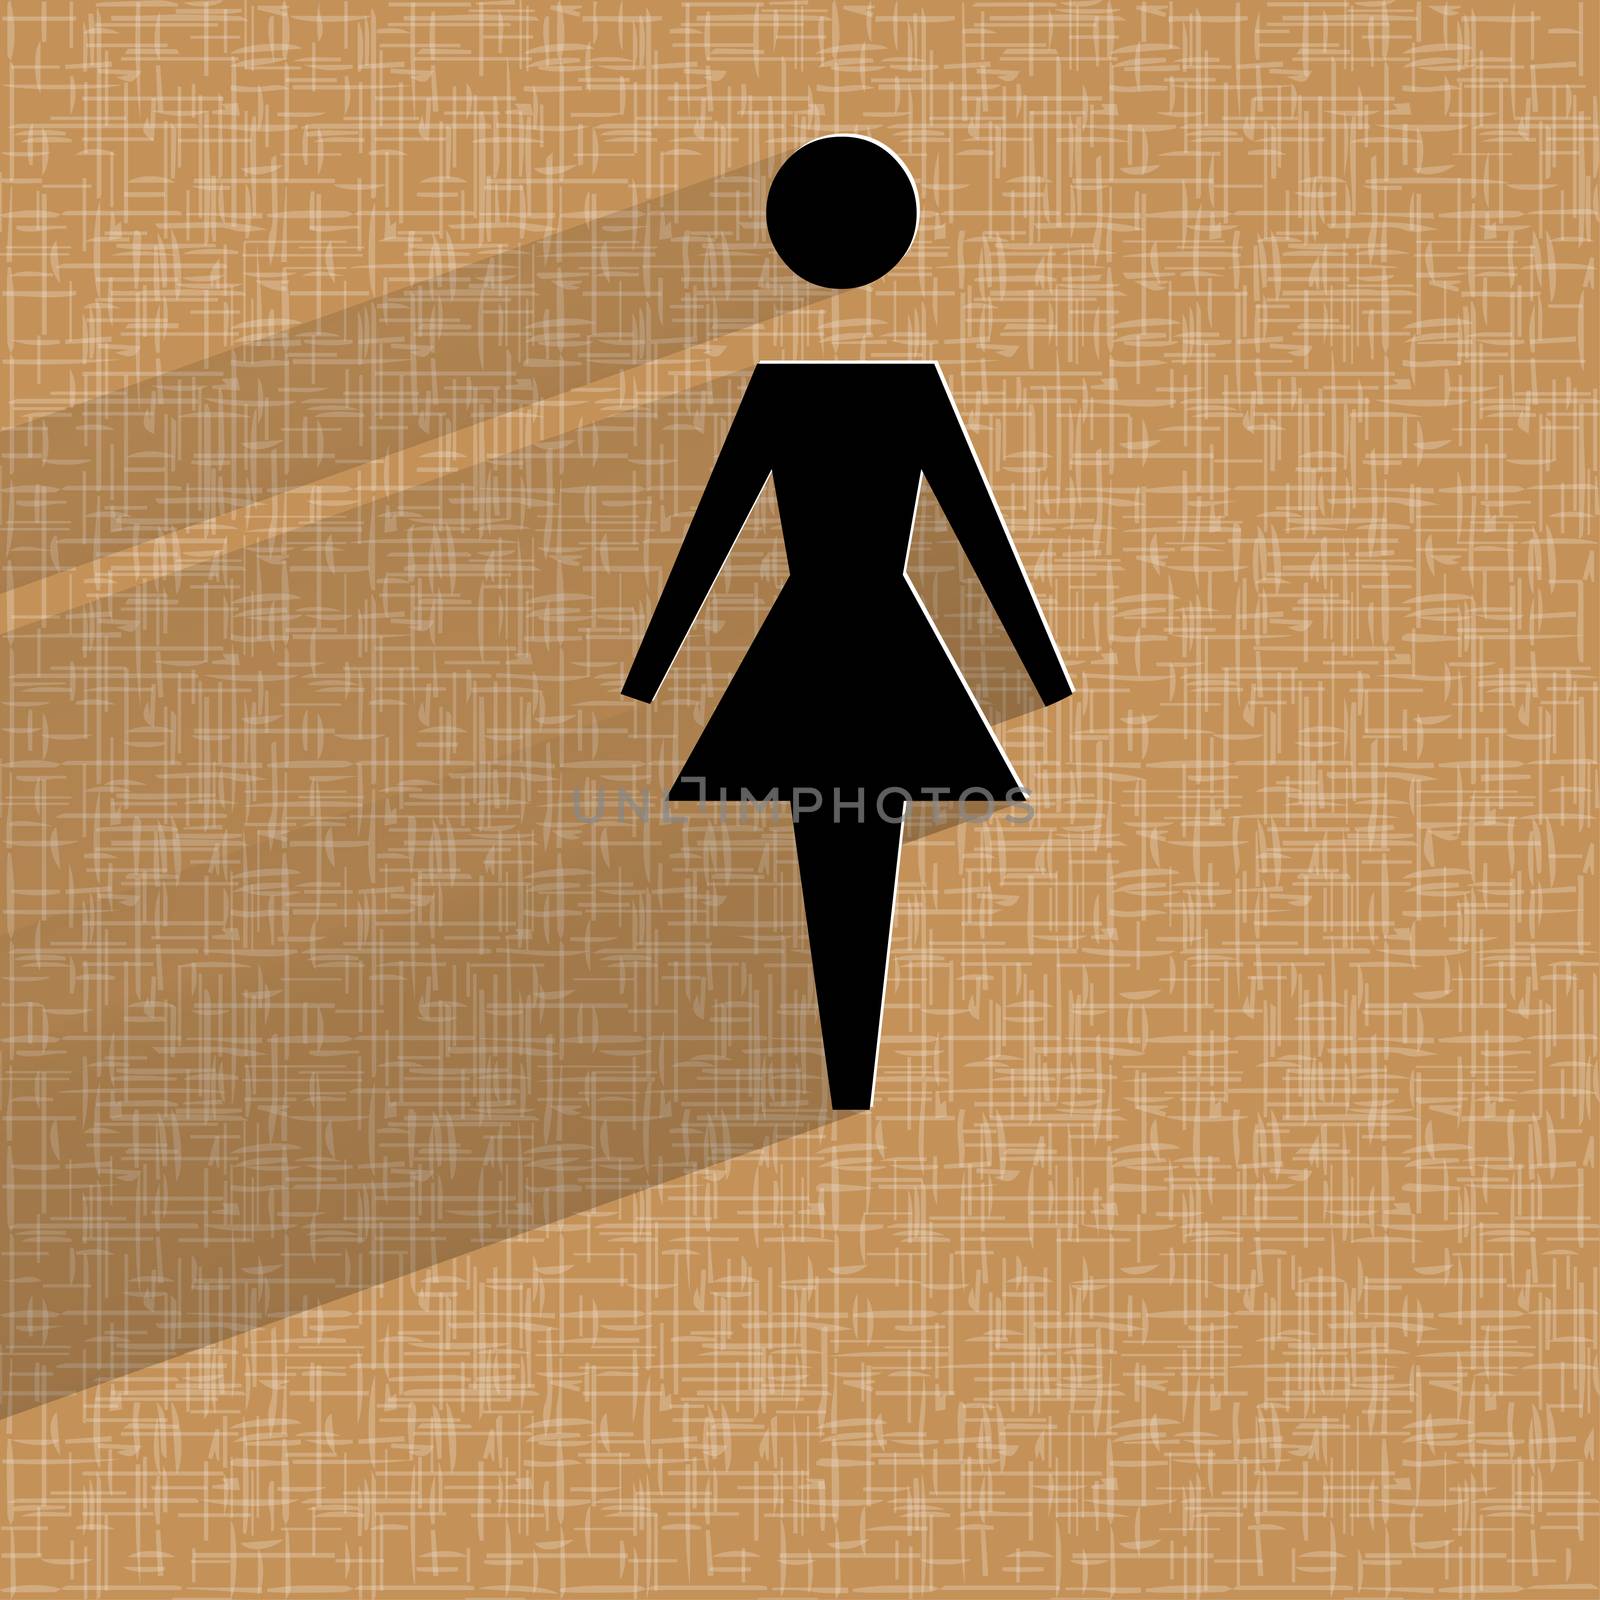 woman restroom. Flat modern web design on a flat geometric abstract background  by serhii_lohvyniuk